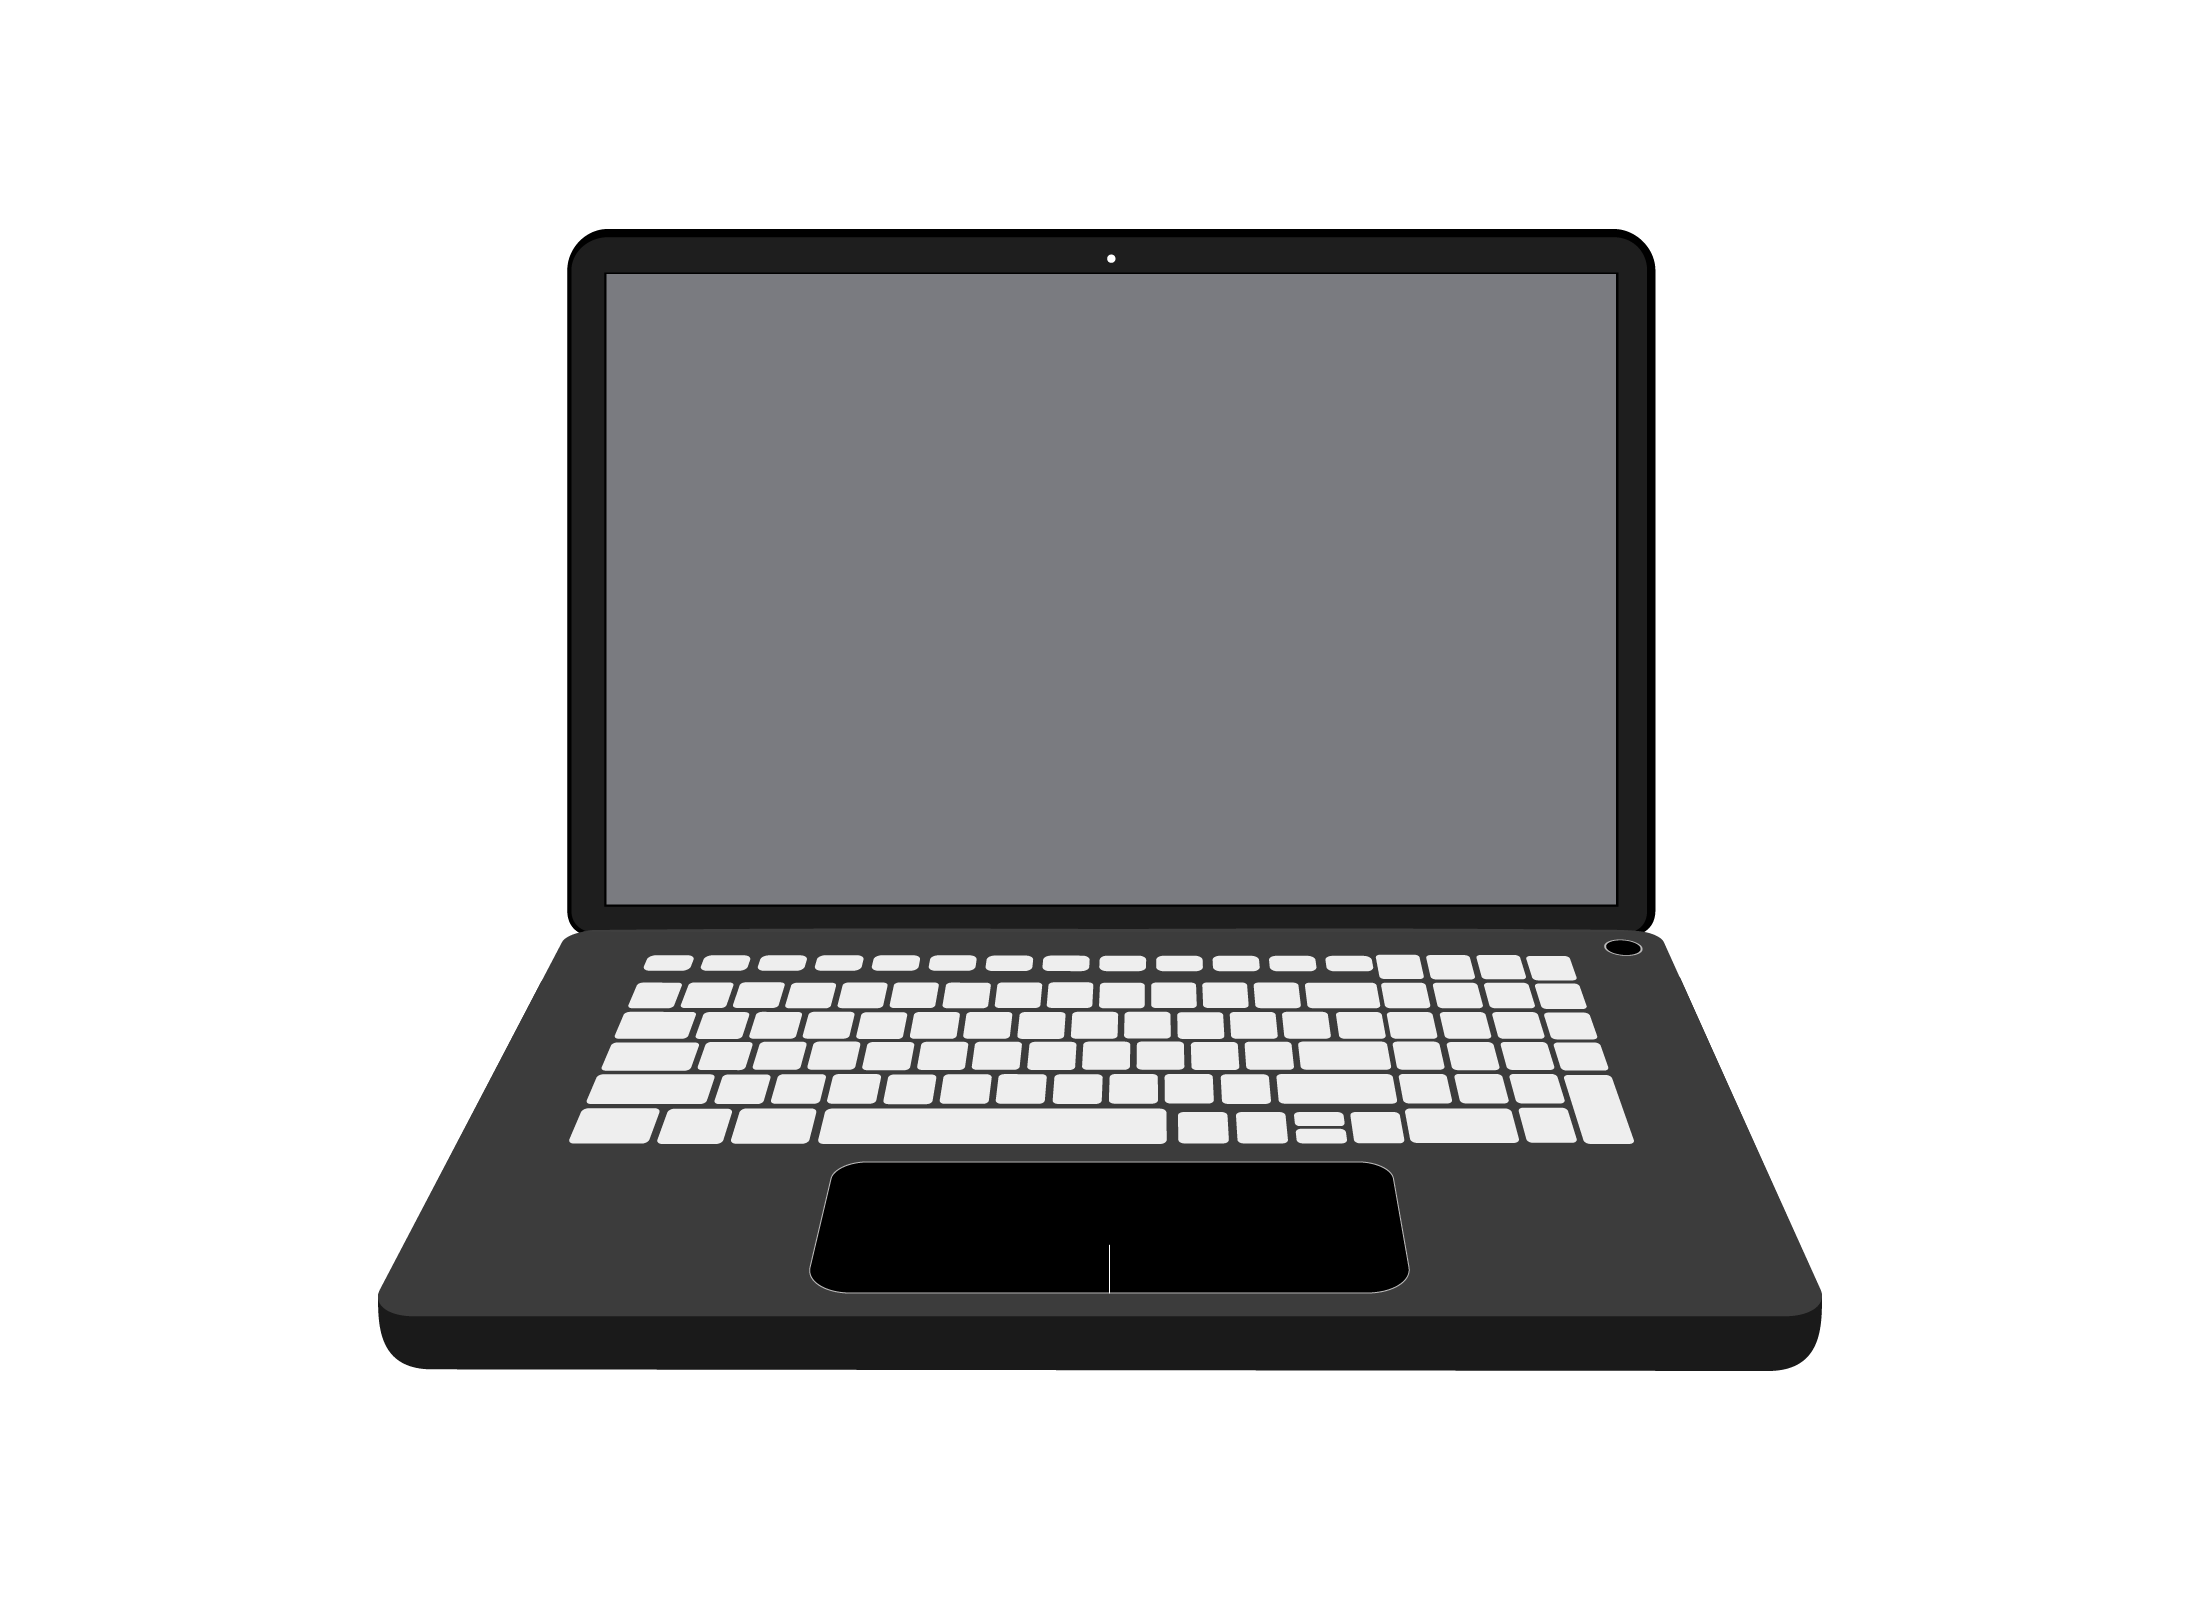 A laptop computer